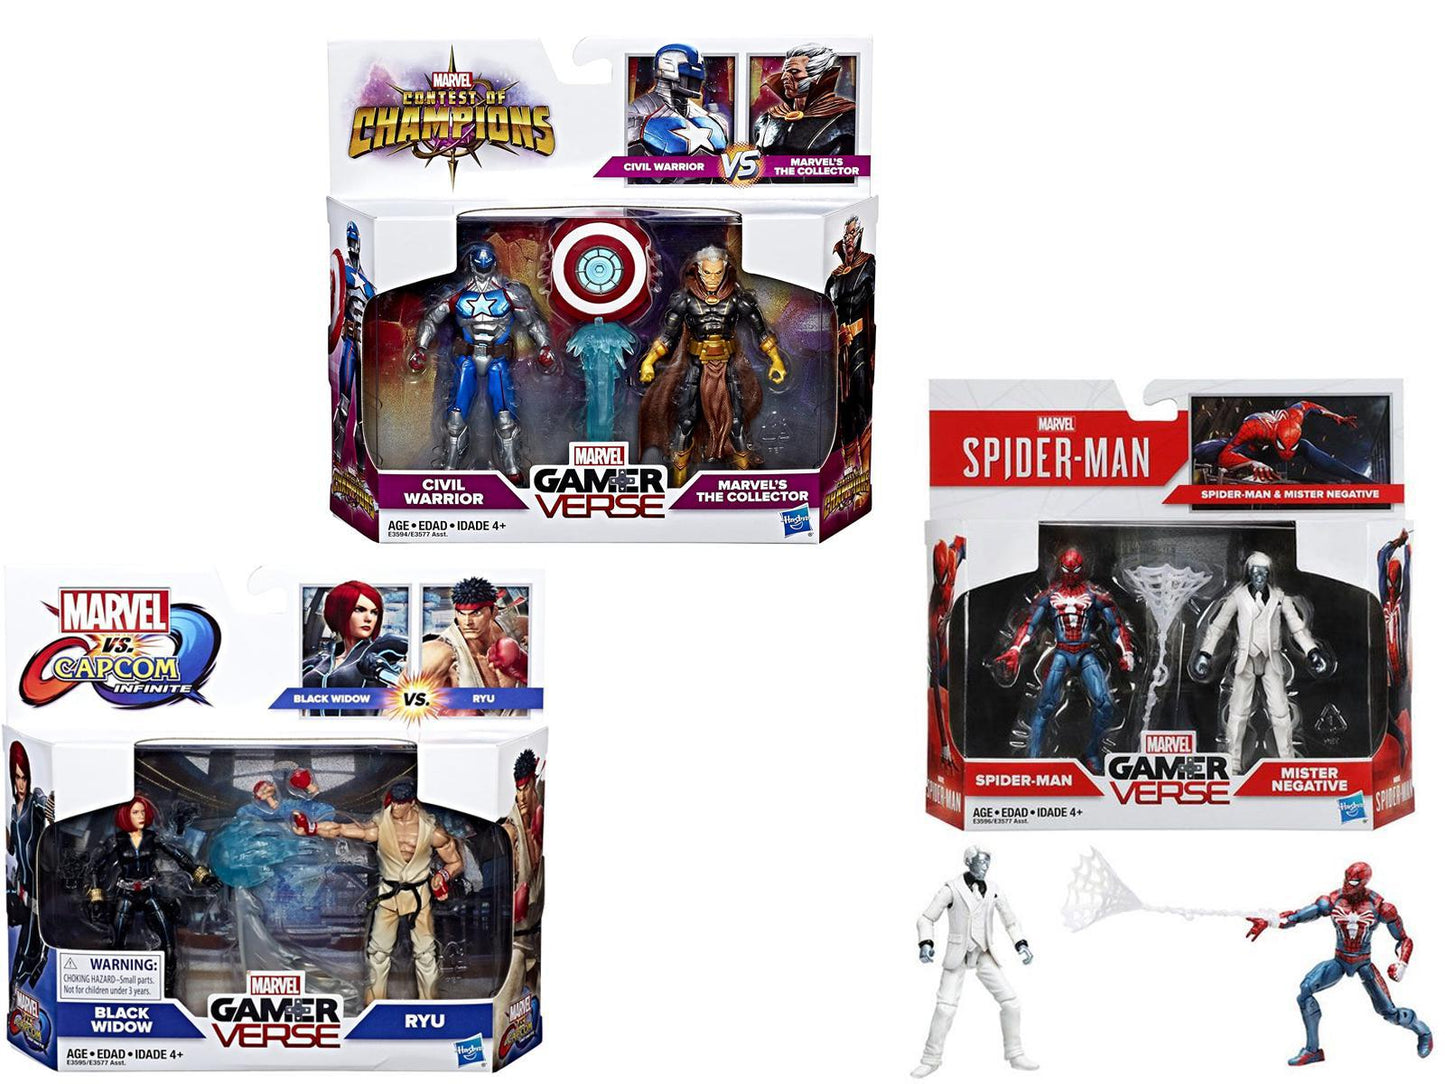 Marvel Gamerverse Exclusive Action Figure 2 Pack: Spider-Man and Mister Negative, Civil warrior Marvel, Black widow Ryu